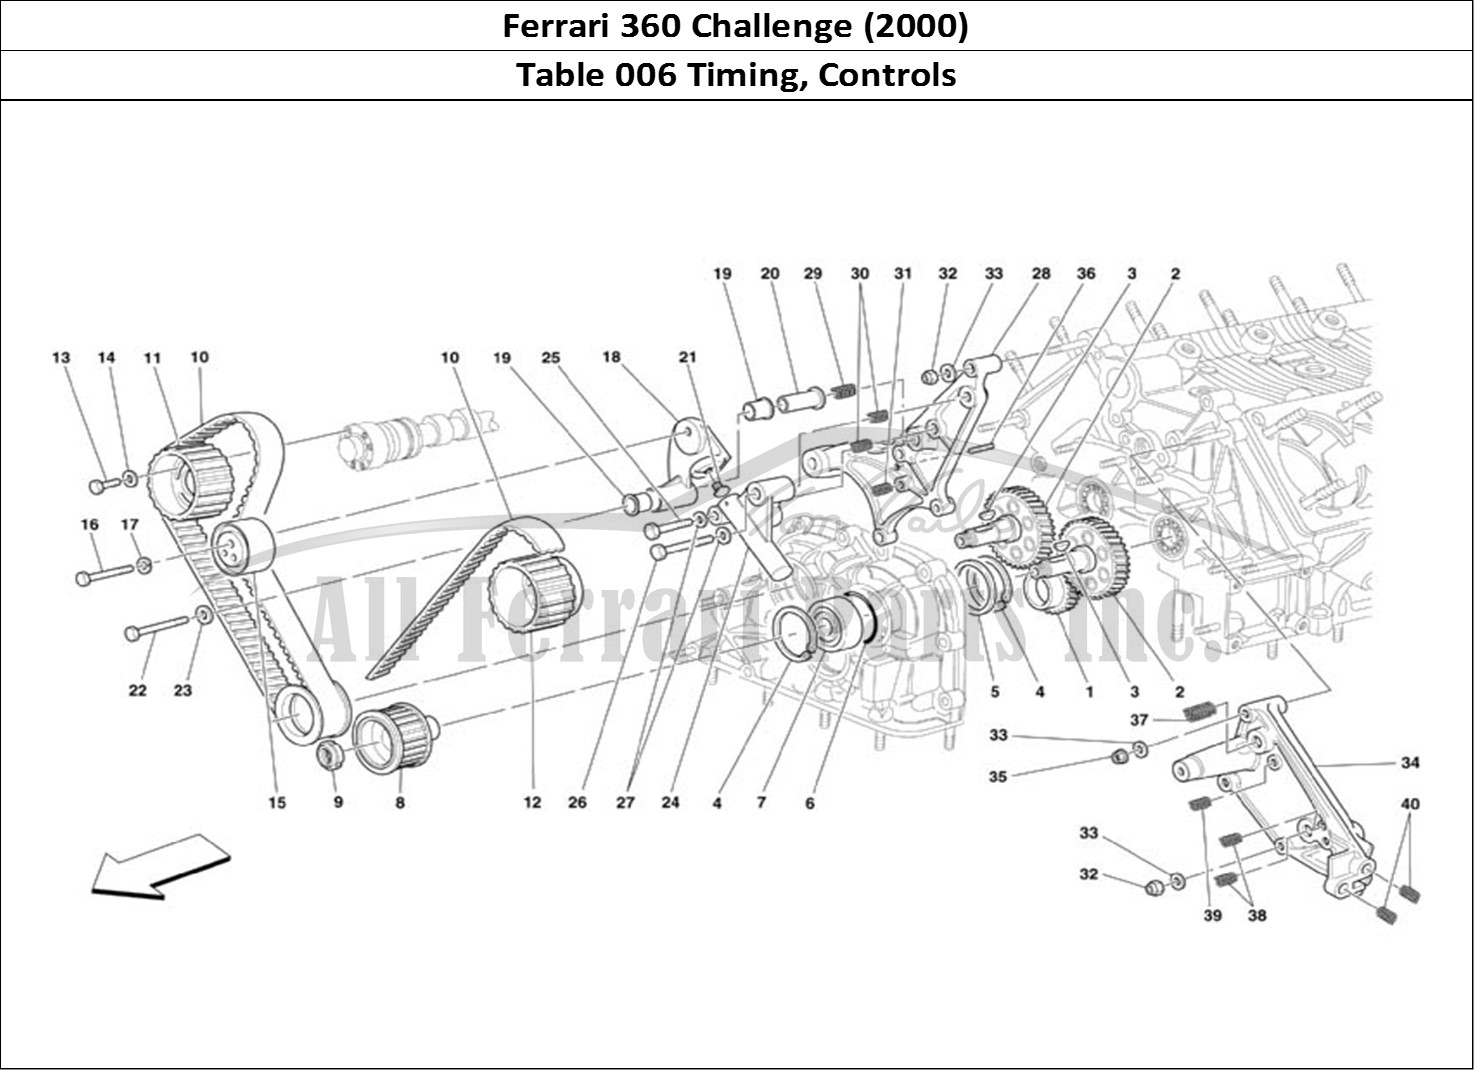 Ferrari Parts Ferrari 360 Challenge (2000) Page 006 Timing - Controls